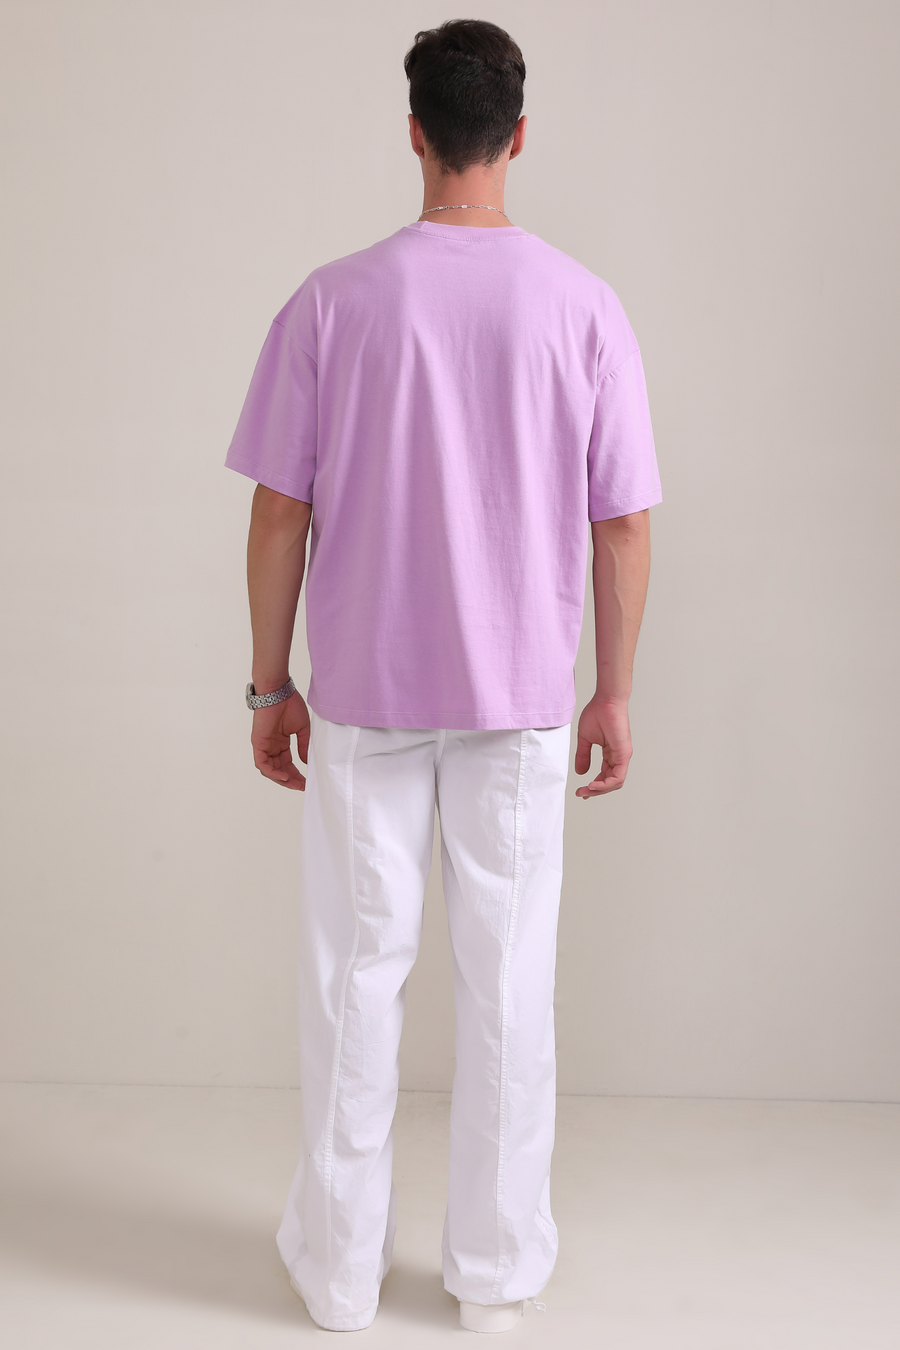 MIAMI- Oversized t-shirt